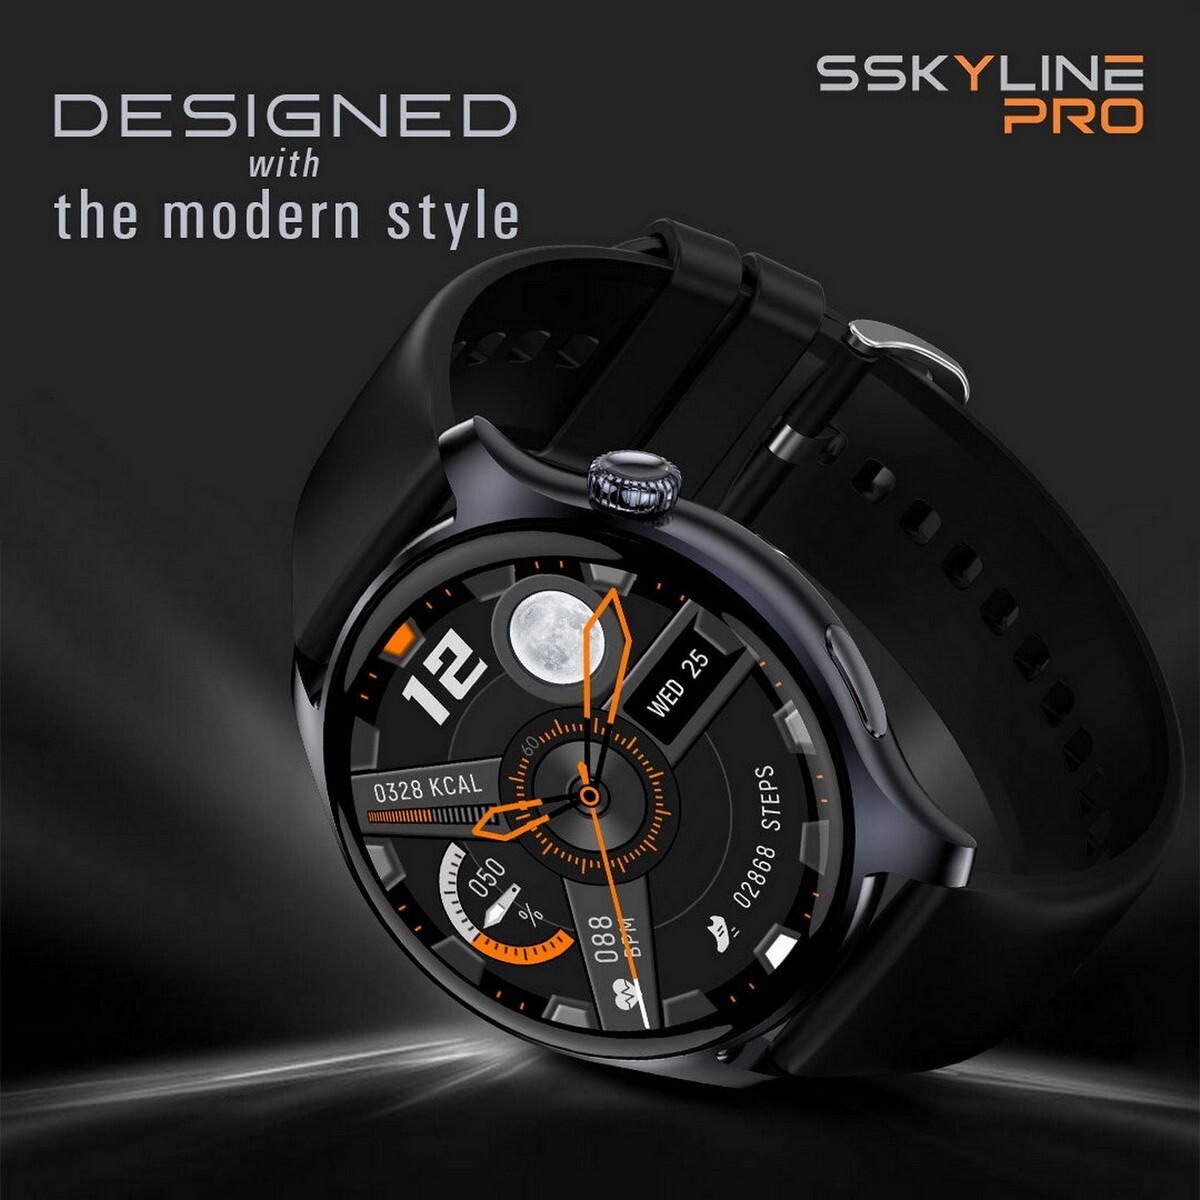 Just Corseca Smart Watch Sskyline Pro Black